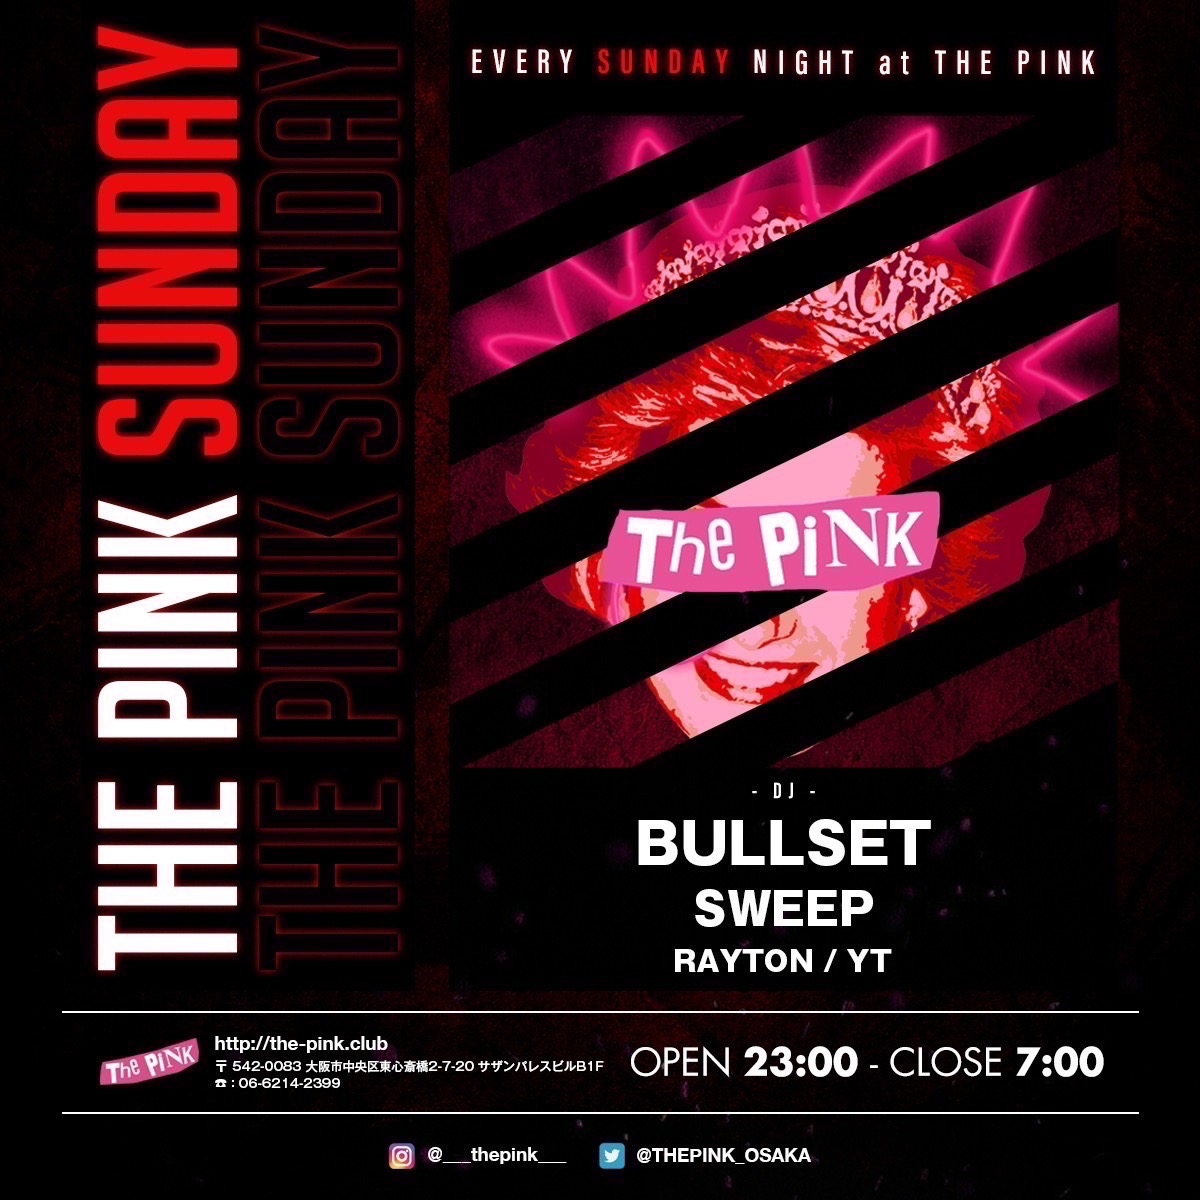 DJ BULLSET (@BULLSET) 出演イベント 10/22(日) *毎週日曜 23:00-07:00 THE PINK (@THEPINK_OSAKA) 「THE PINK SUNDAY」 ▼DJs DJ BULLSET DJ SWEEP DJ RAYTON DJ YT the-pink.club #WREP